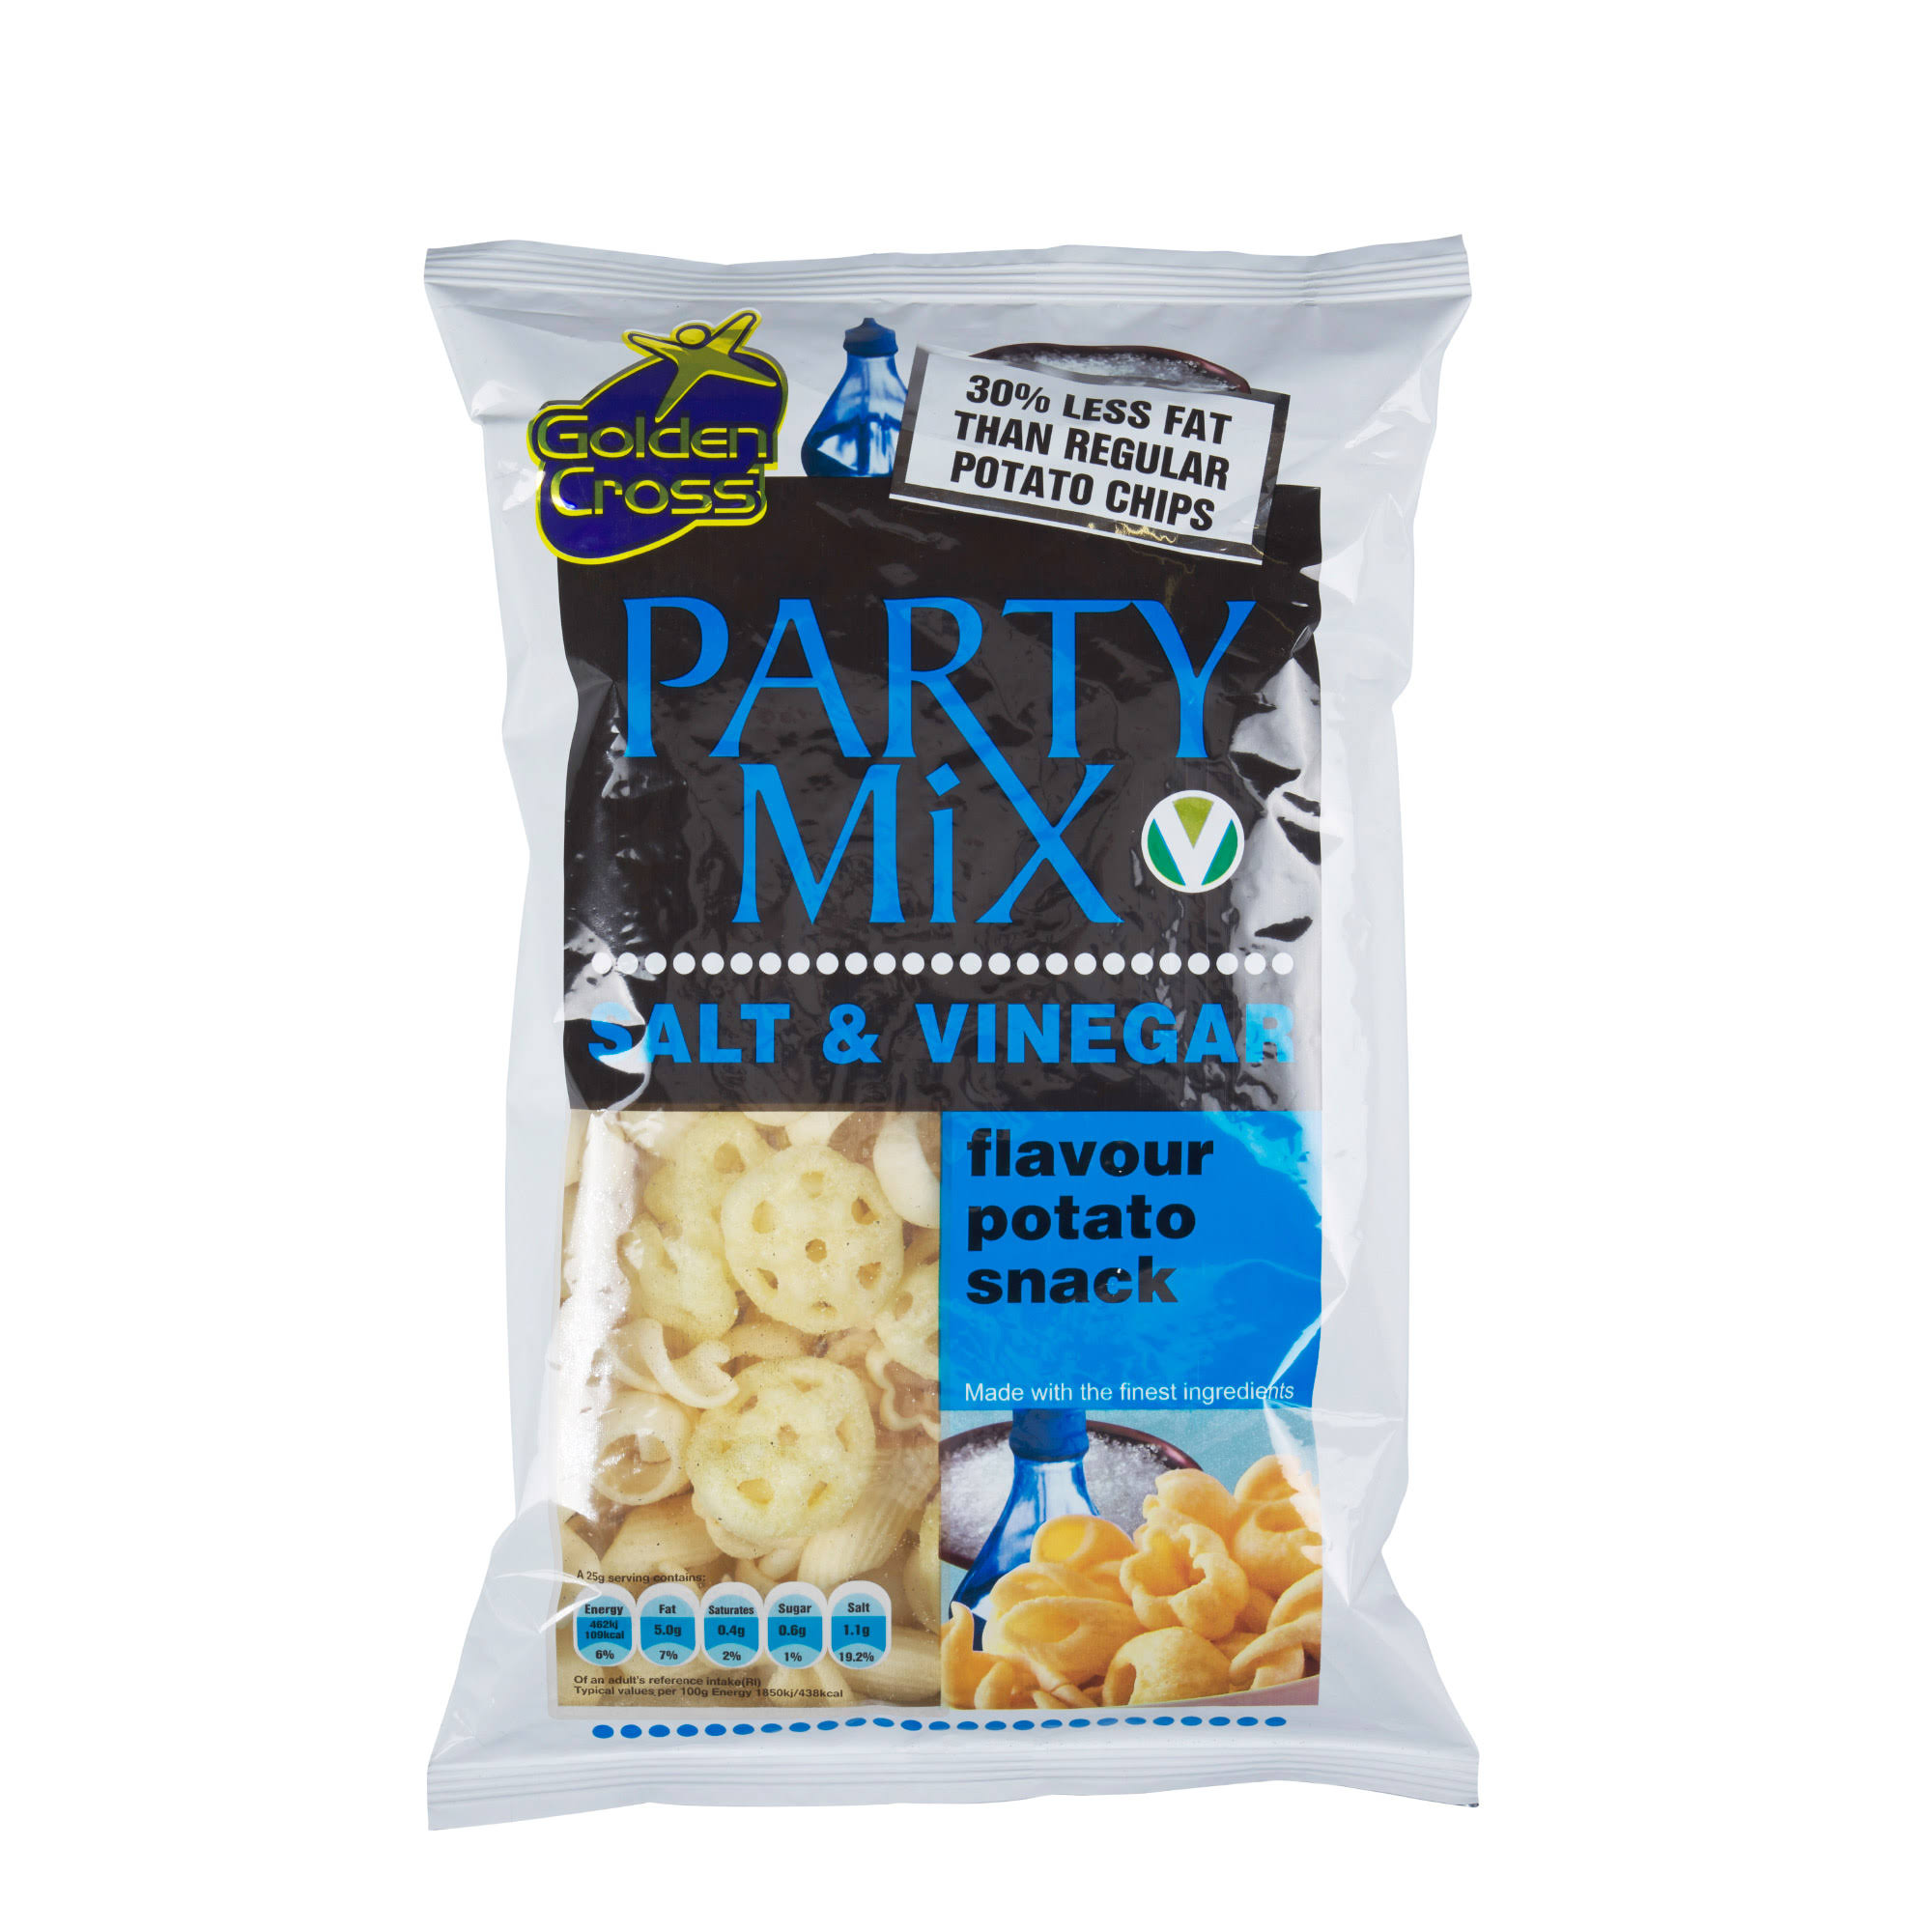 Golden Cross Party Mix Salt and Vinegar Flavour Potato Snacks - 125g